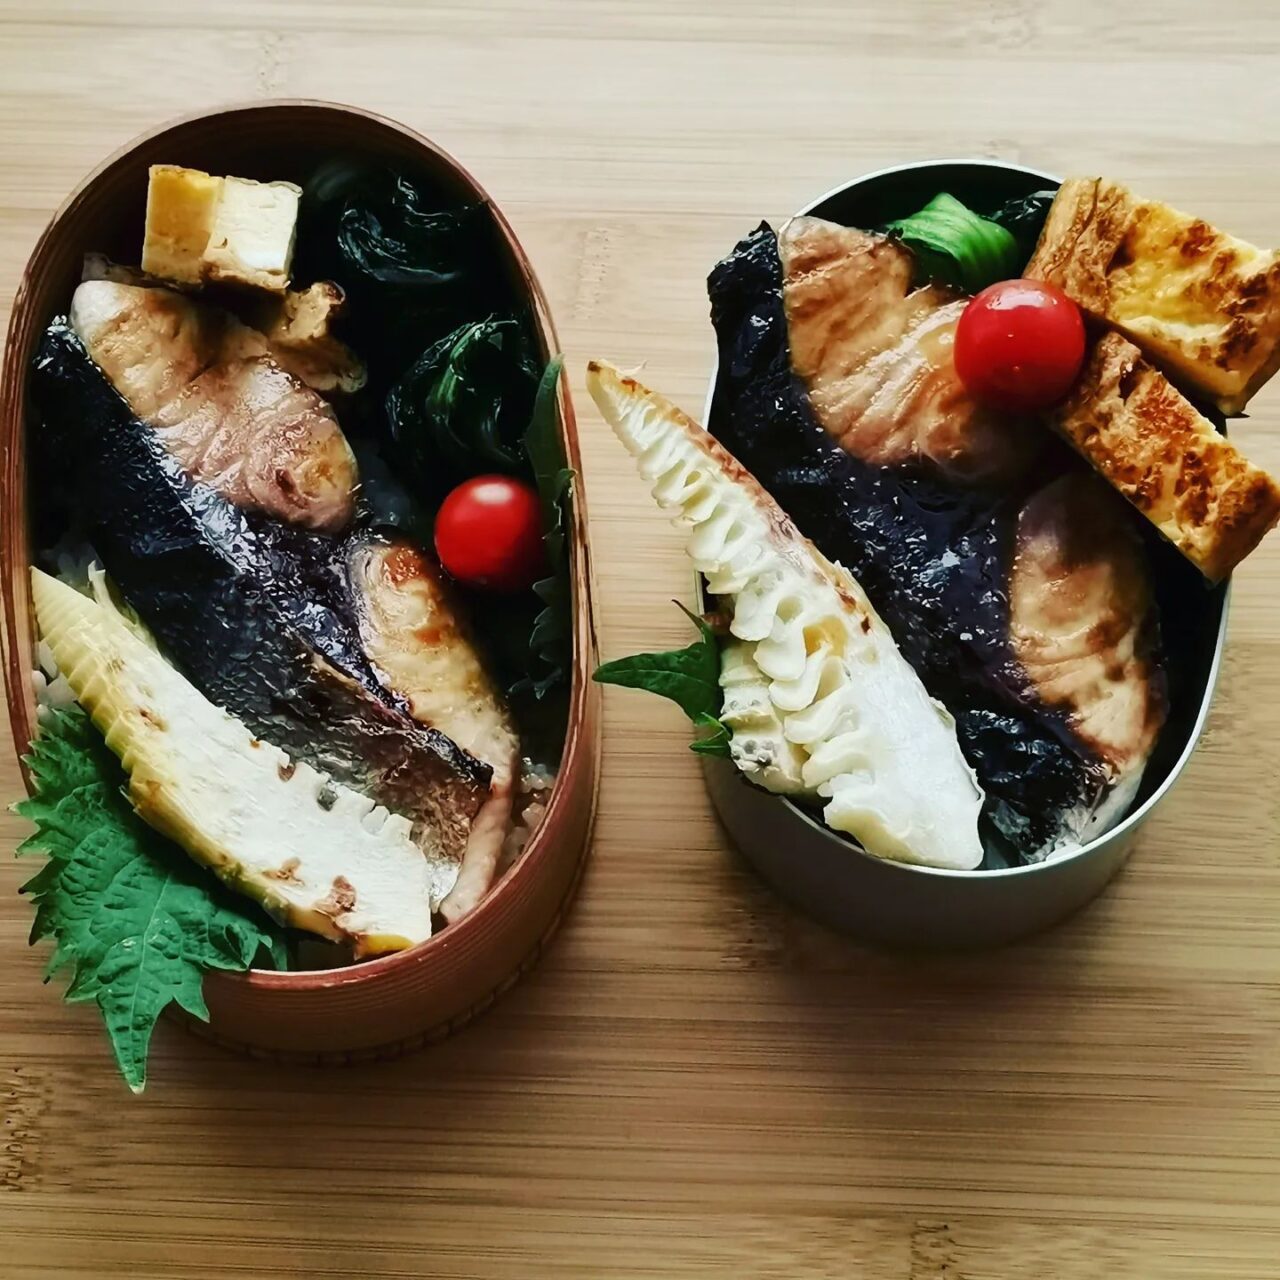 Hi there from Fukuoka Japan☁
Teriyaki yellowtail
Grilled bamboo shoots
Boiled Takana greens
Japanese omelette
日々ひとつひとつ整えよう☀
#お弁当記録 #お弁当づくり #たけのこ #戦争反対 #StandWithUkraine #WomenEmpowerment